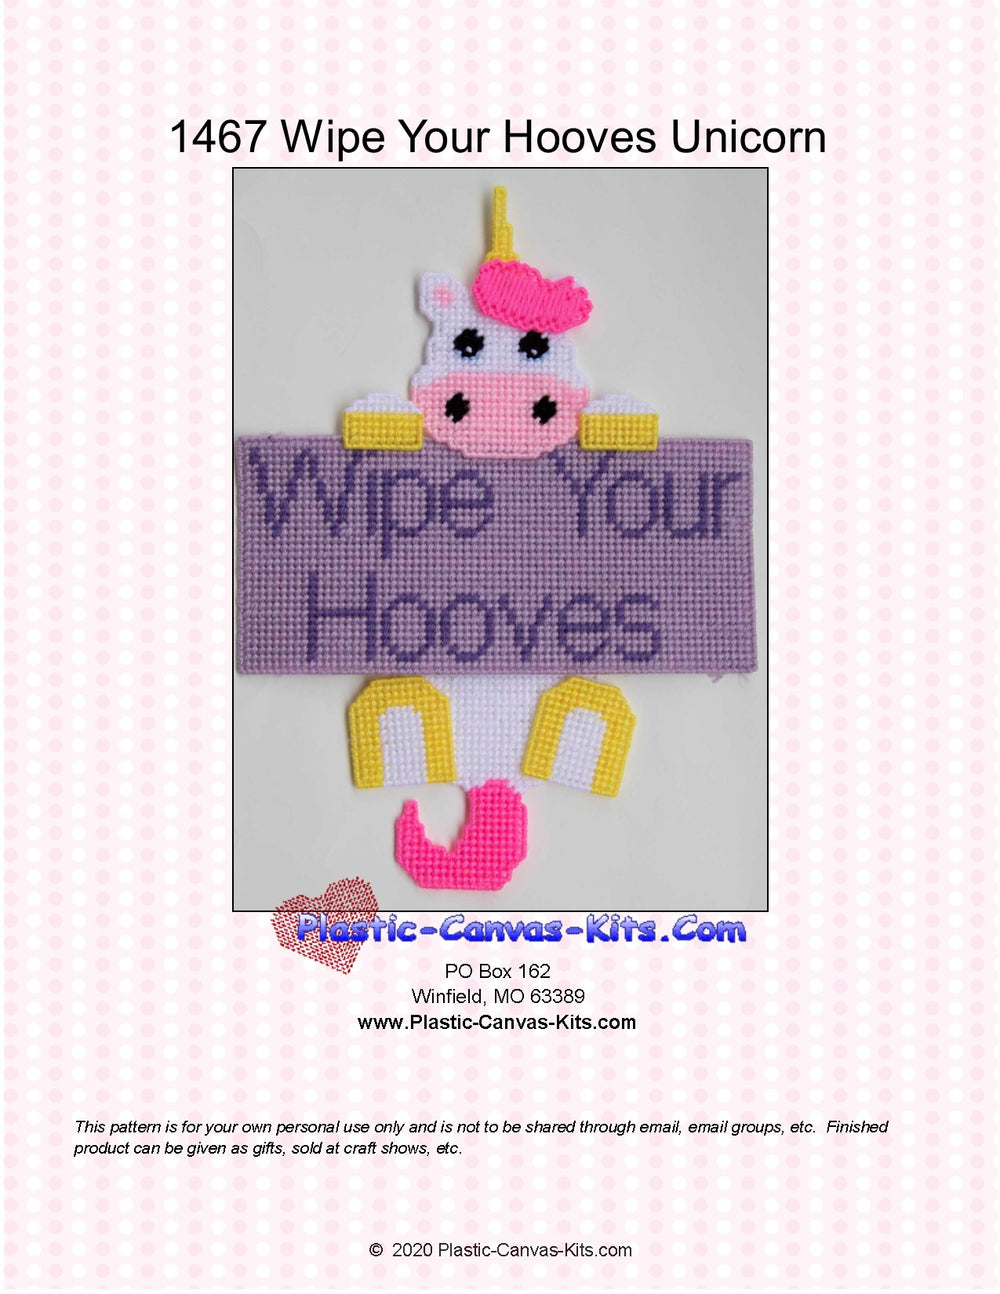 Unicorn-Wipe Your Hooves